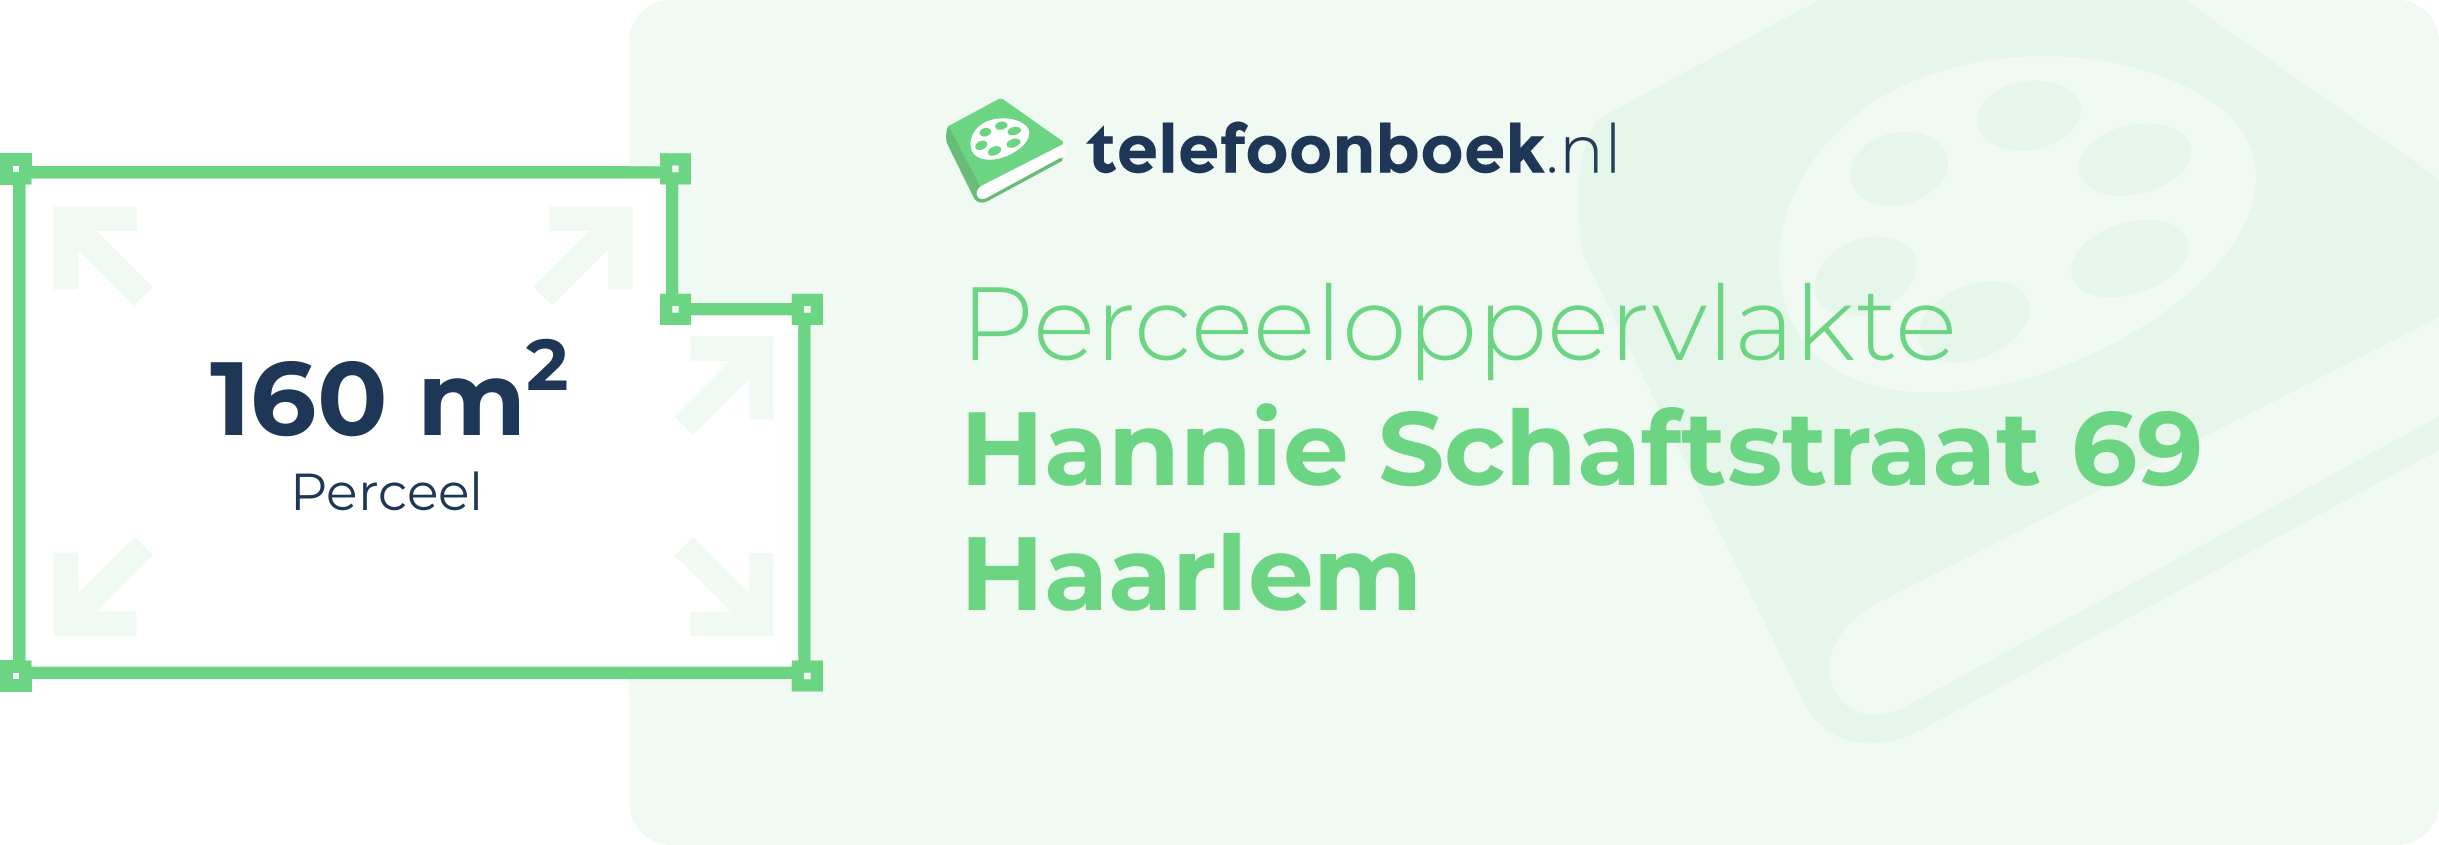 Perceeloppervlakte Hannie Schaftstraat 69 Haarlem